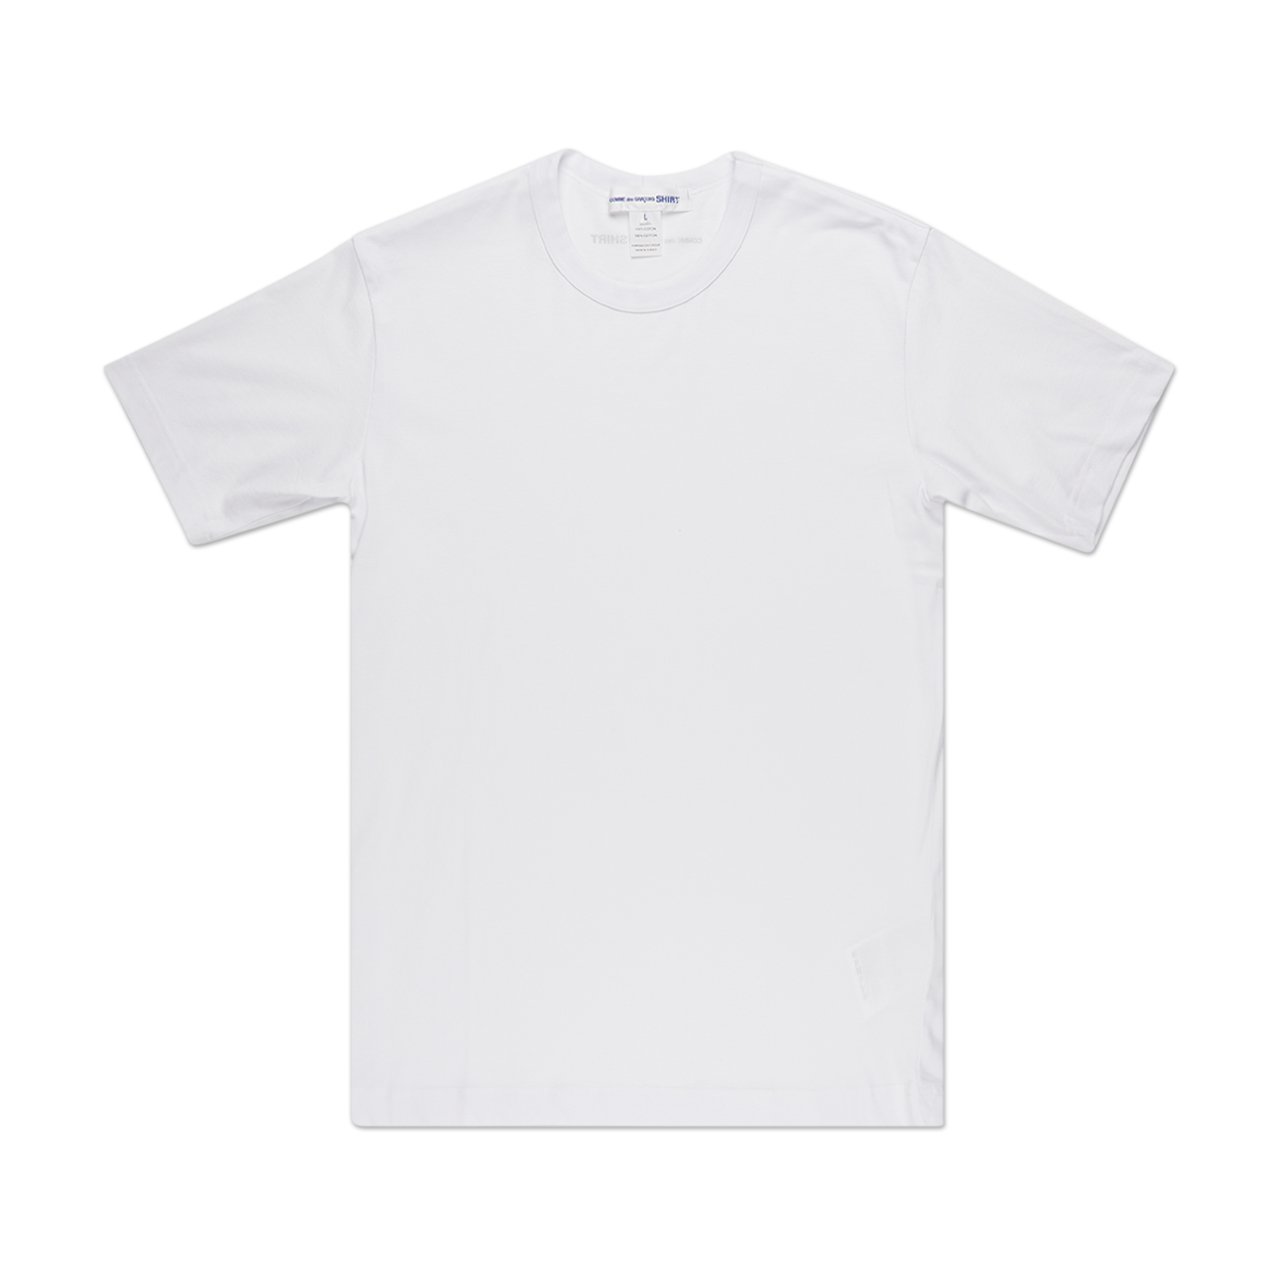 comme des garçons shirt comme des garçons shirt logo t-shirt (white)